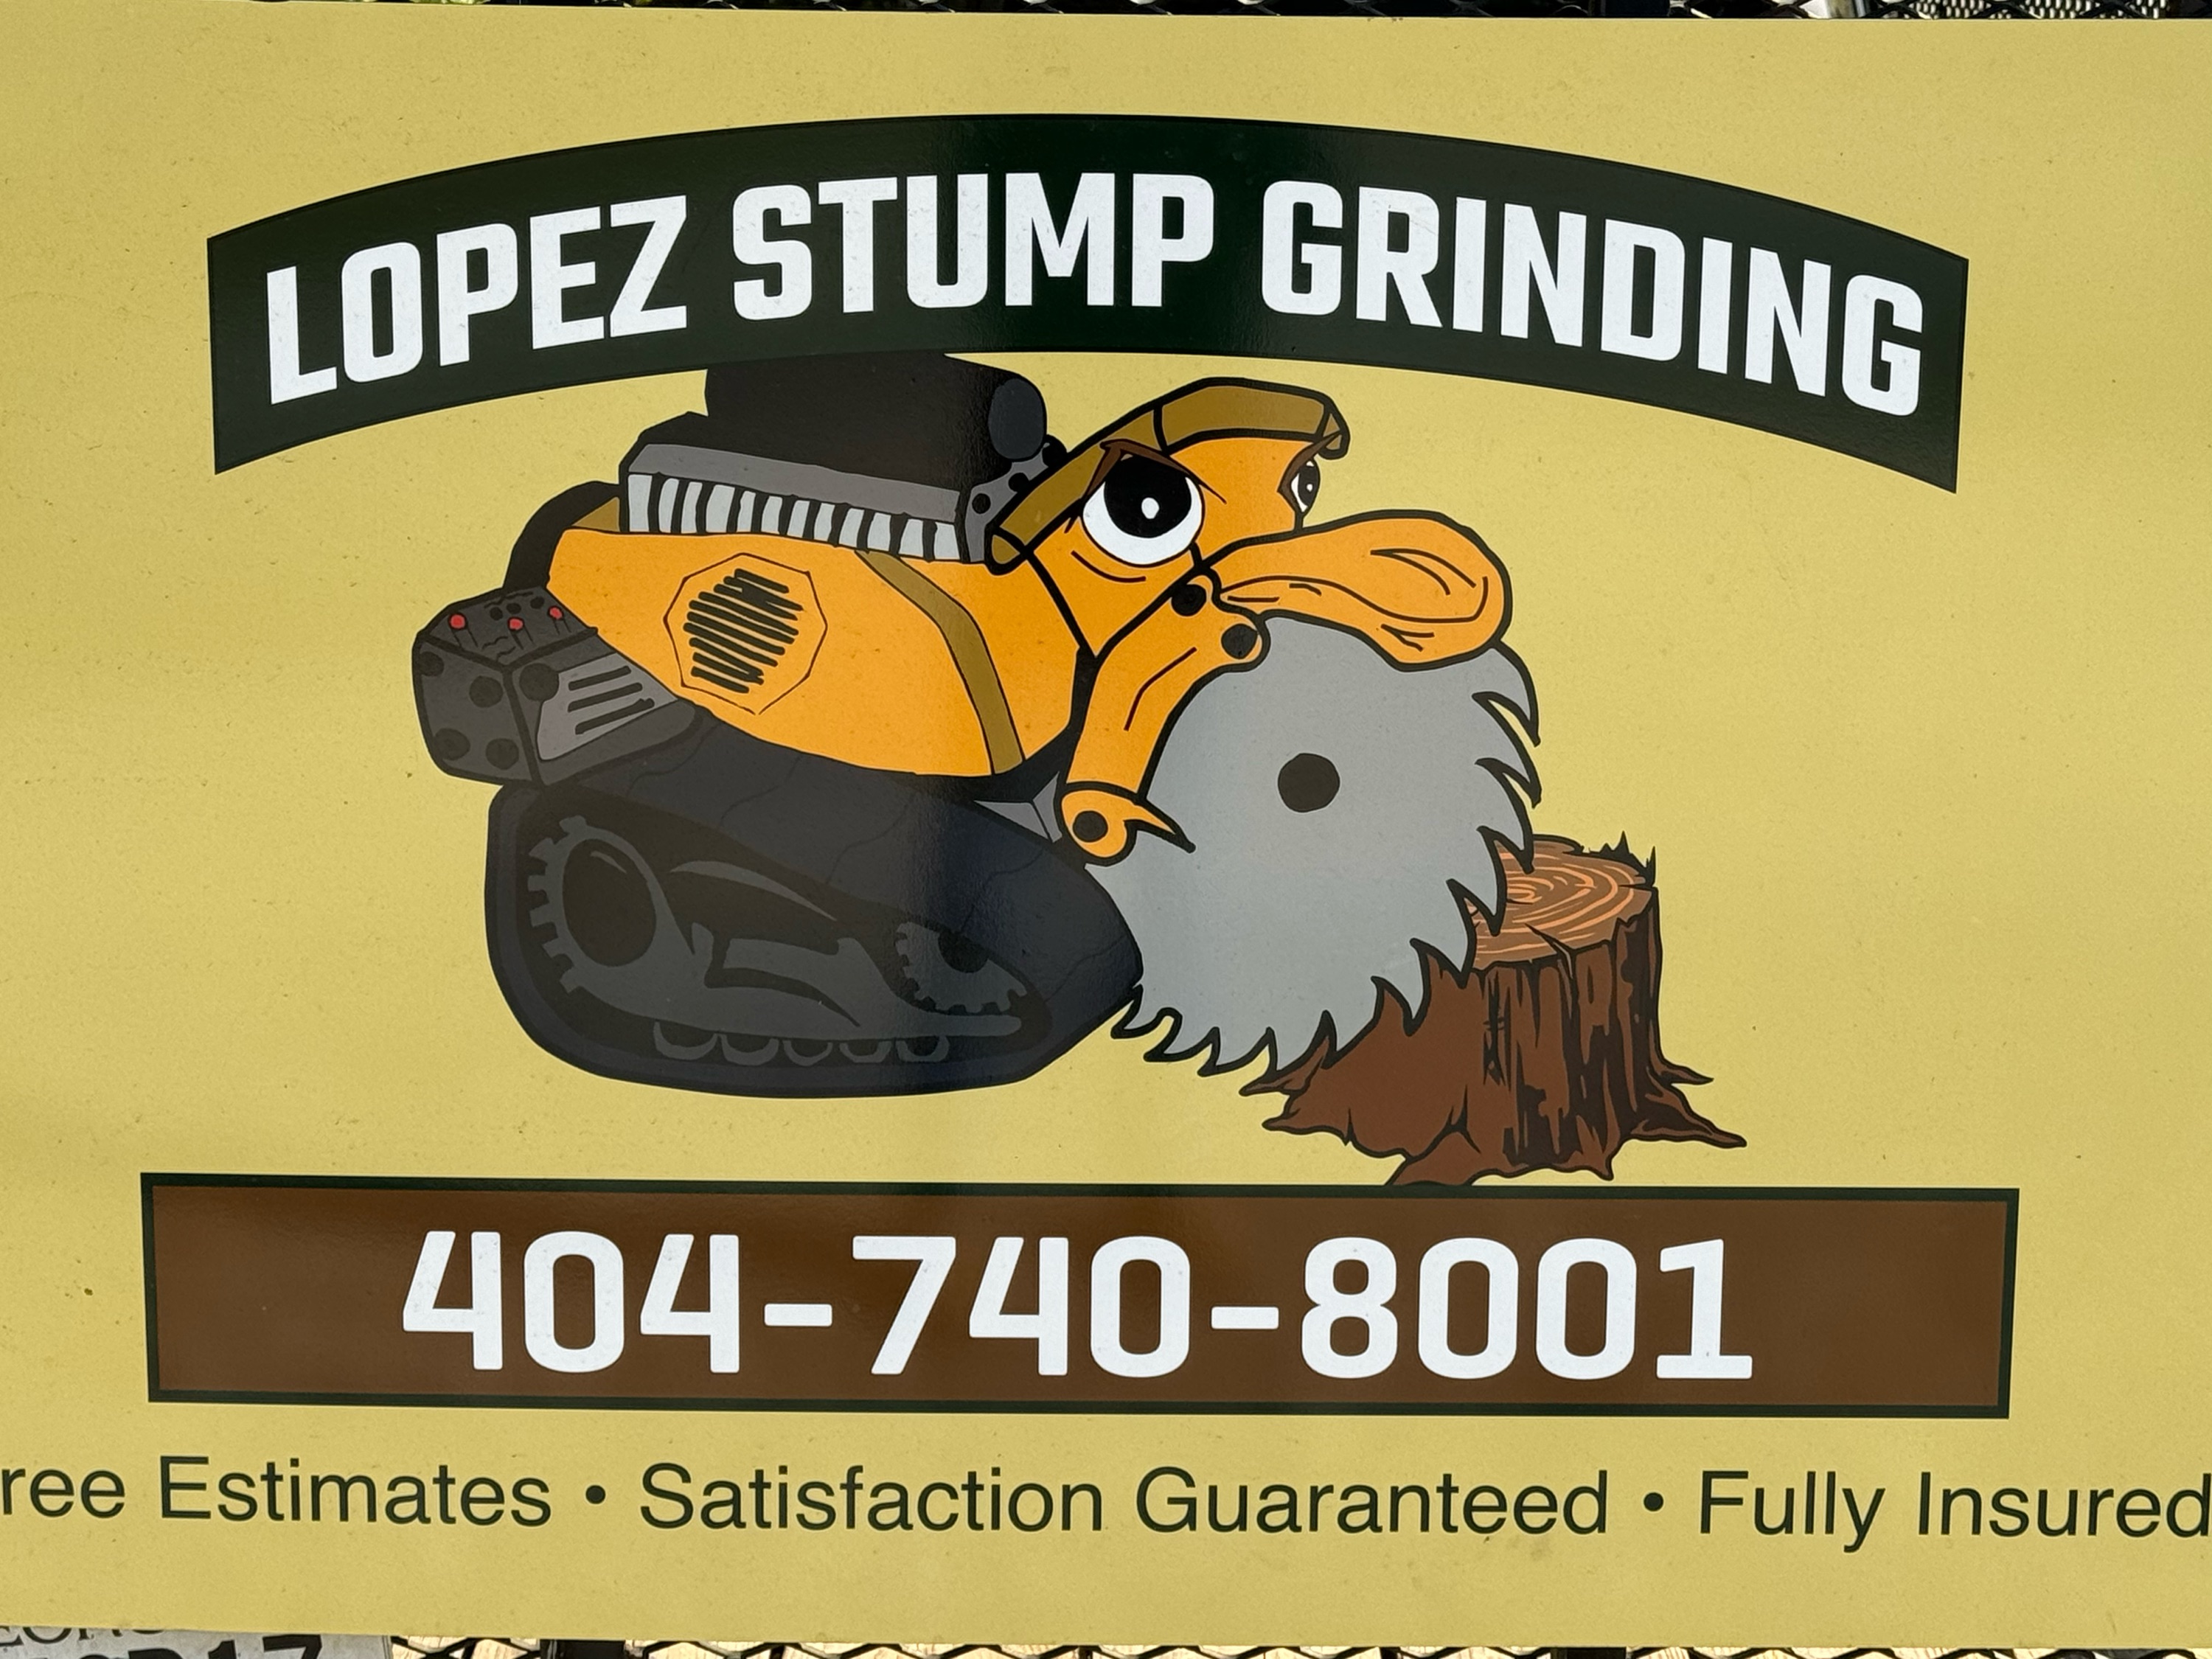 Lopez Stump Grinding Logo